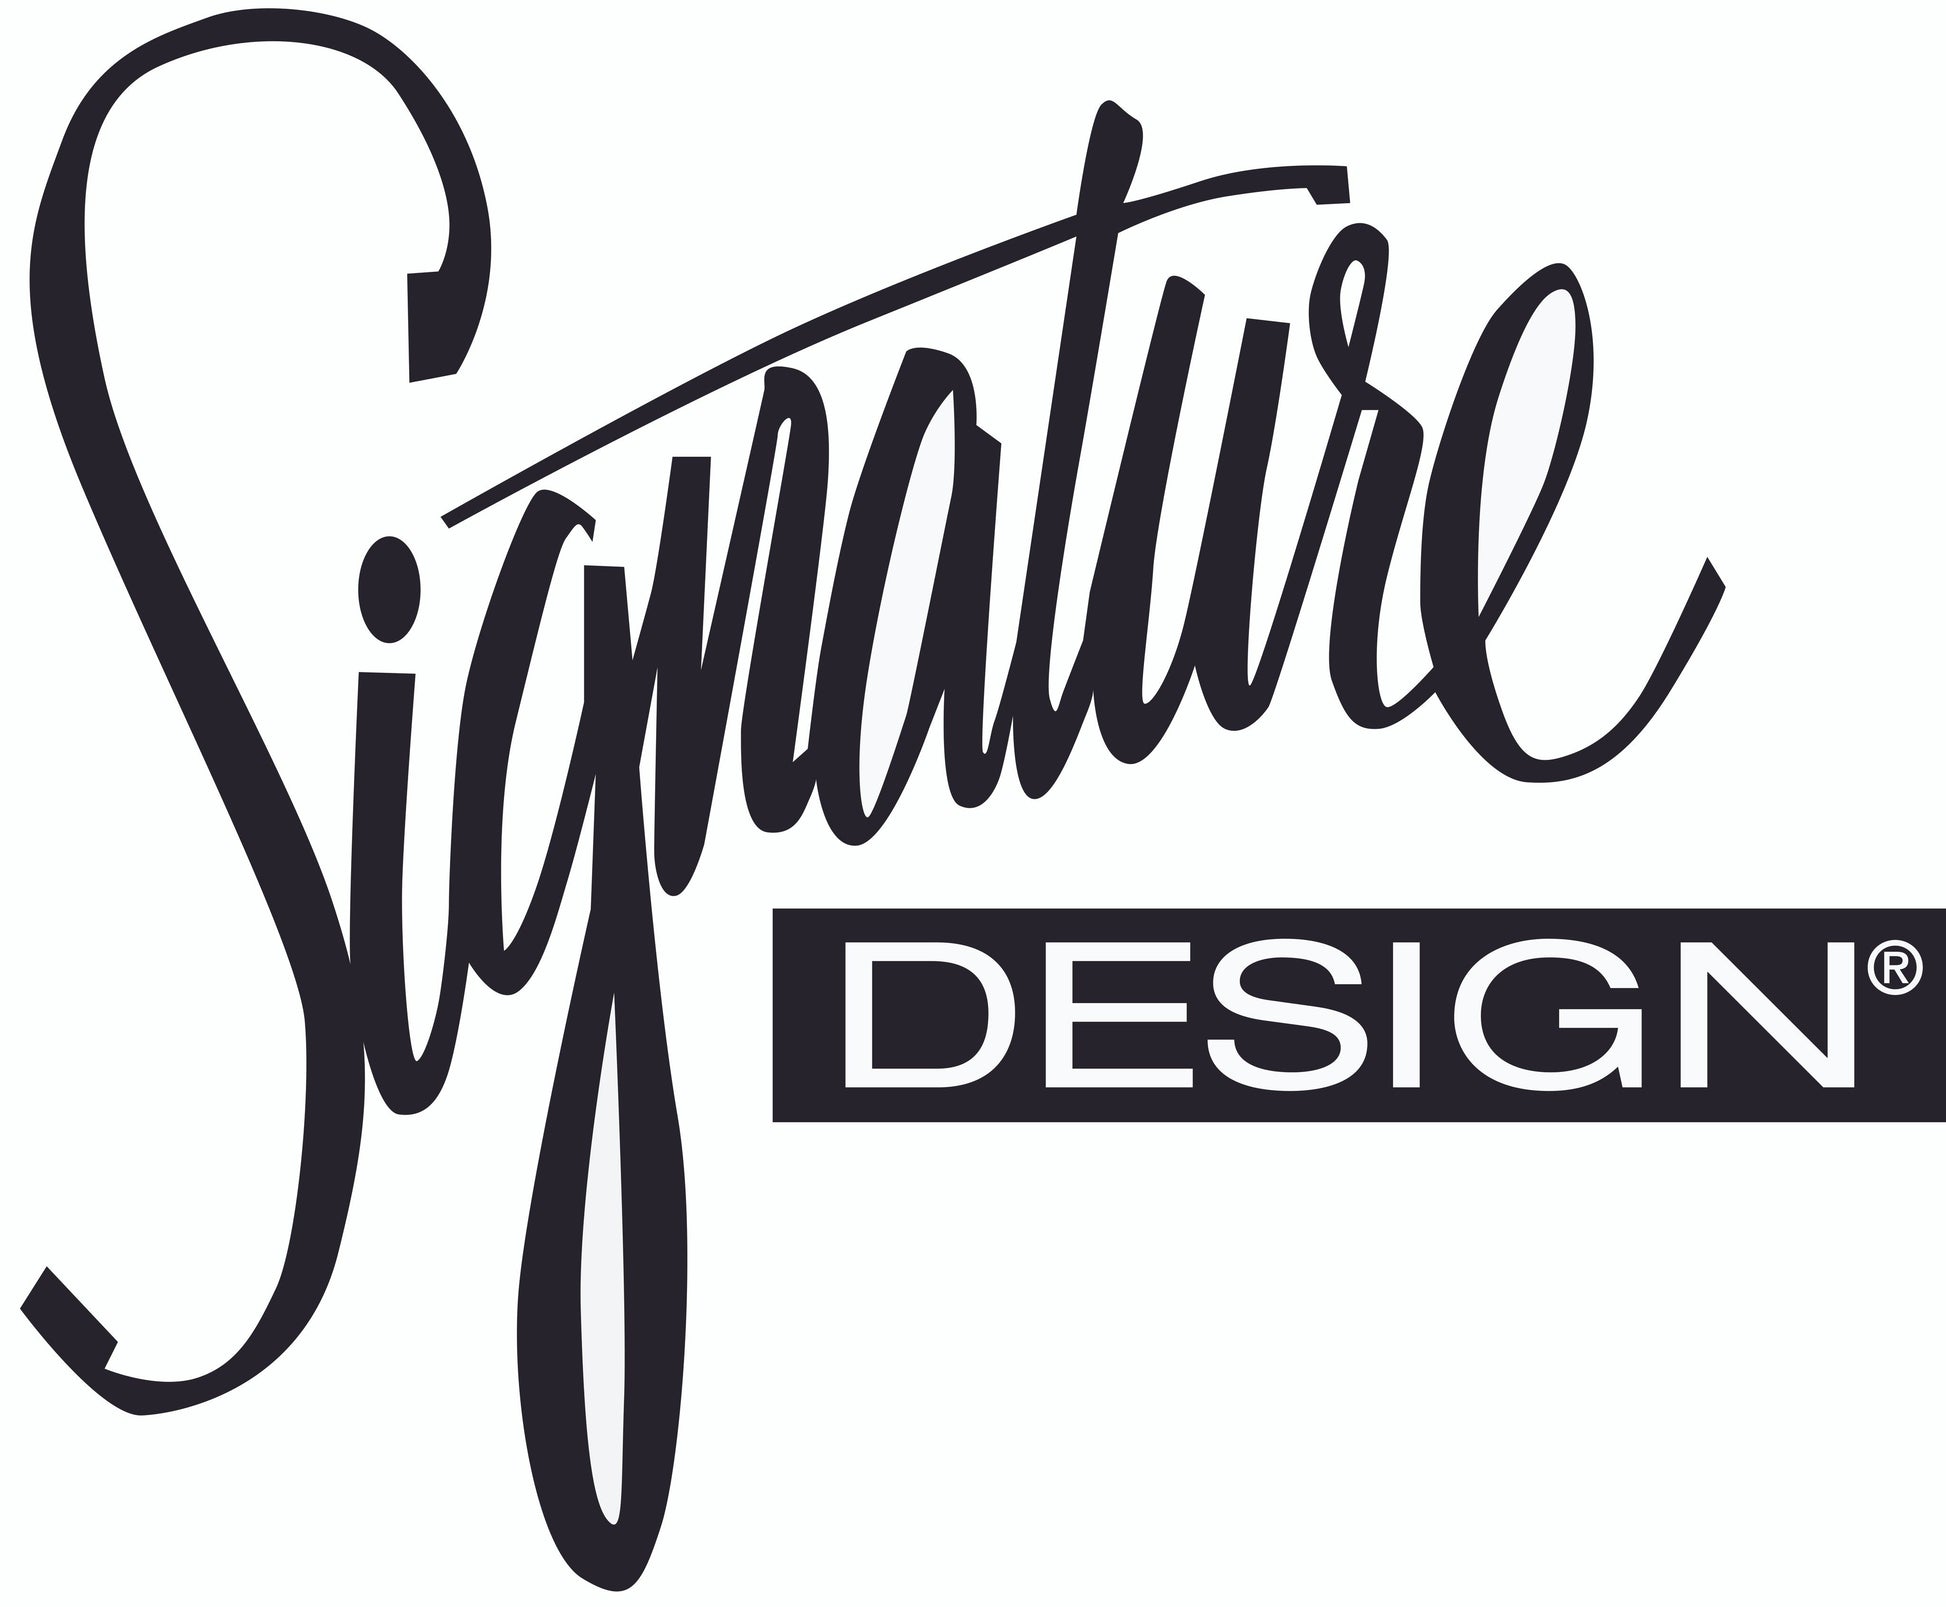 Yarbeck Seven Drawer Dresser Signature Design by Ashley®